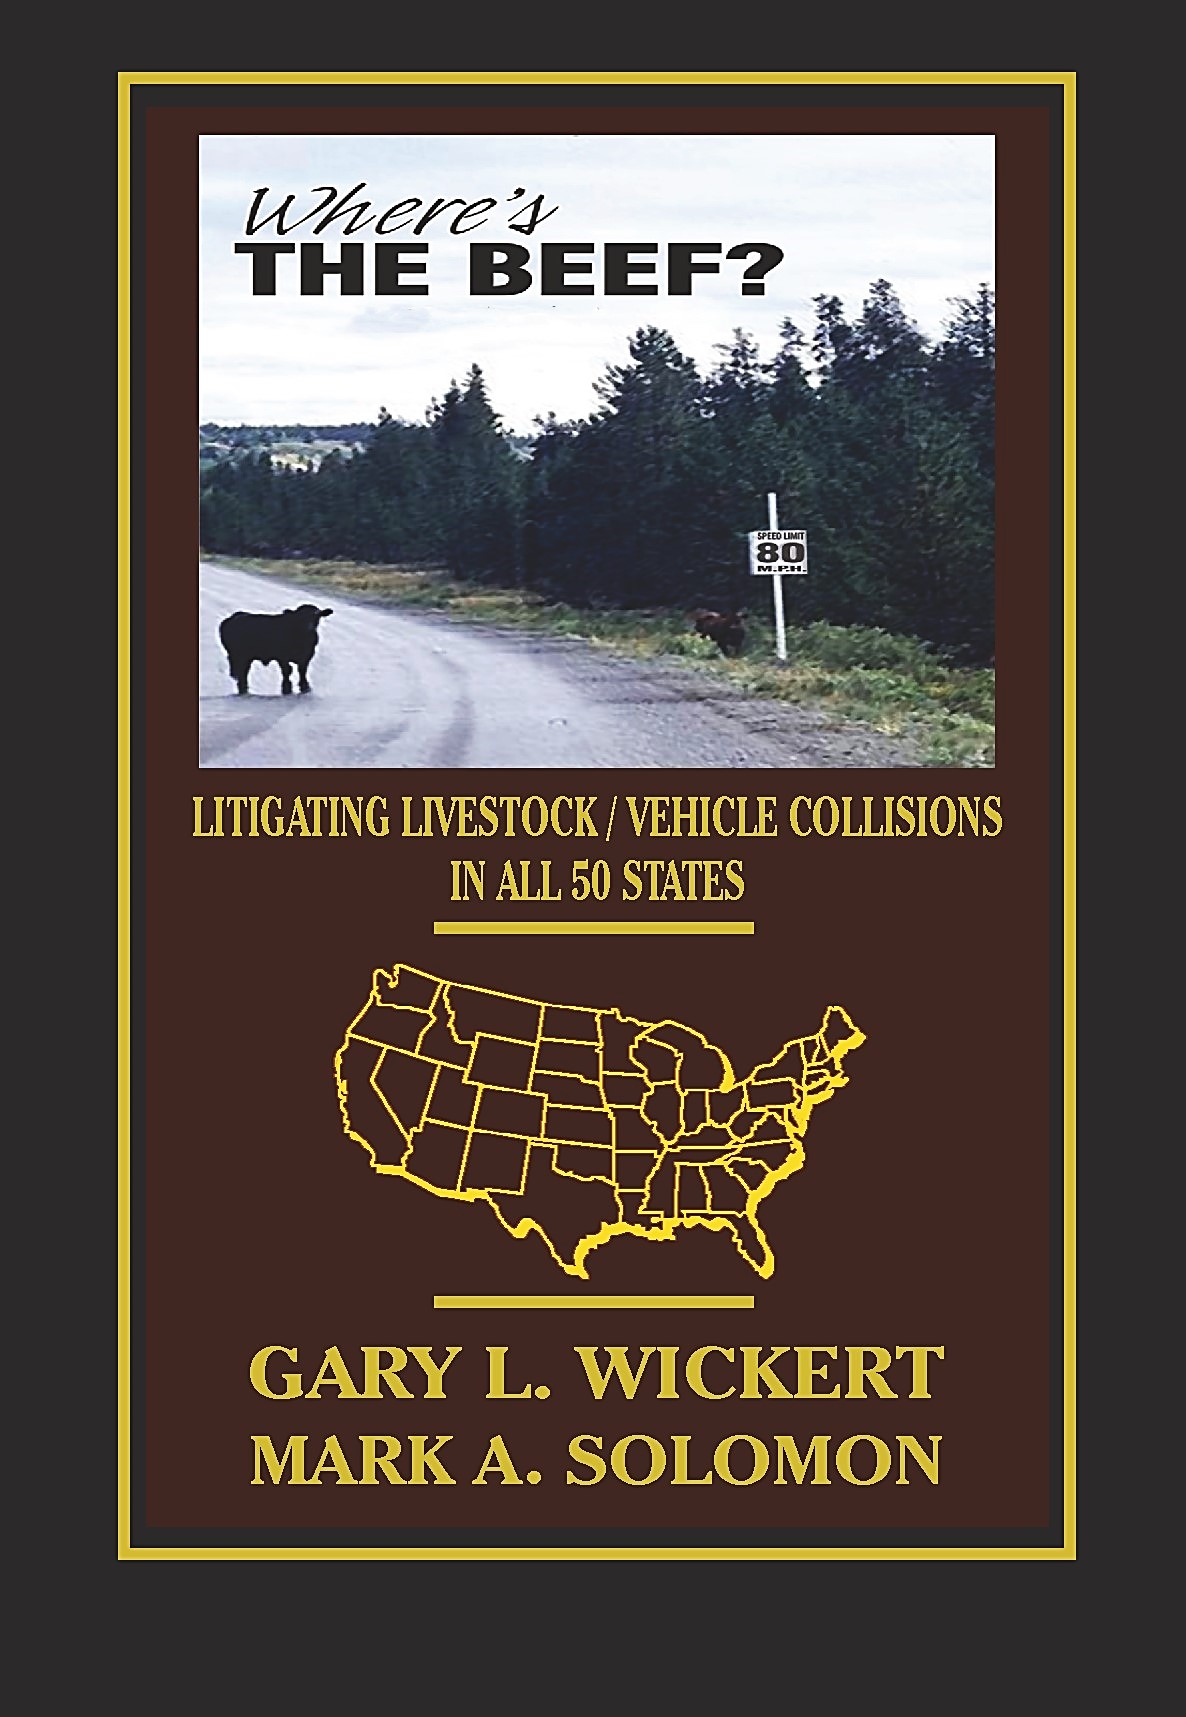 Subrogating Livestock/Vehicle Collisions